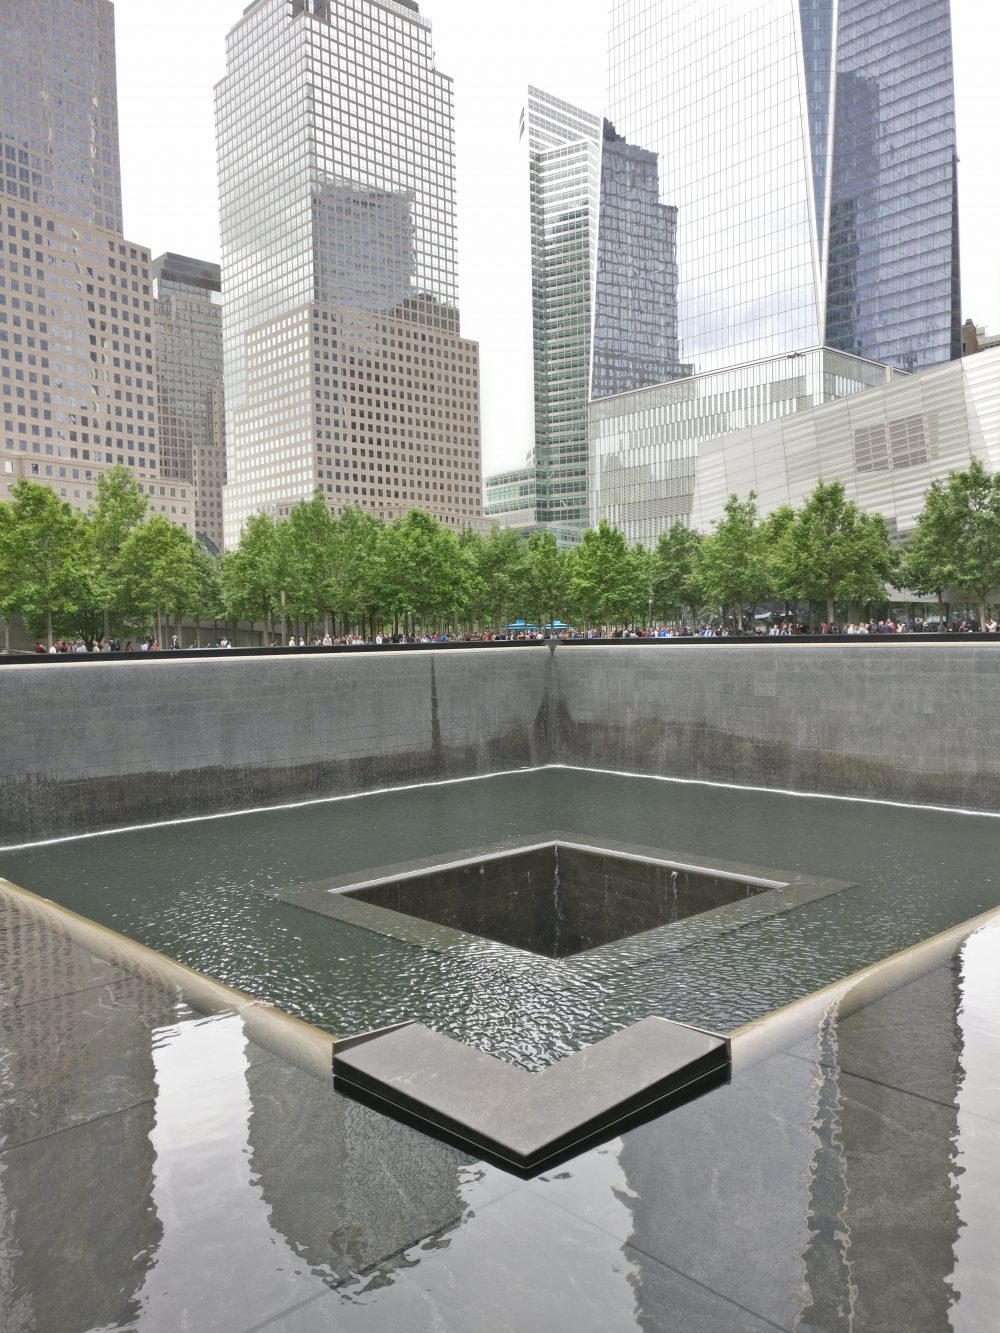 Ground Zero 9:11 Memorial